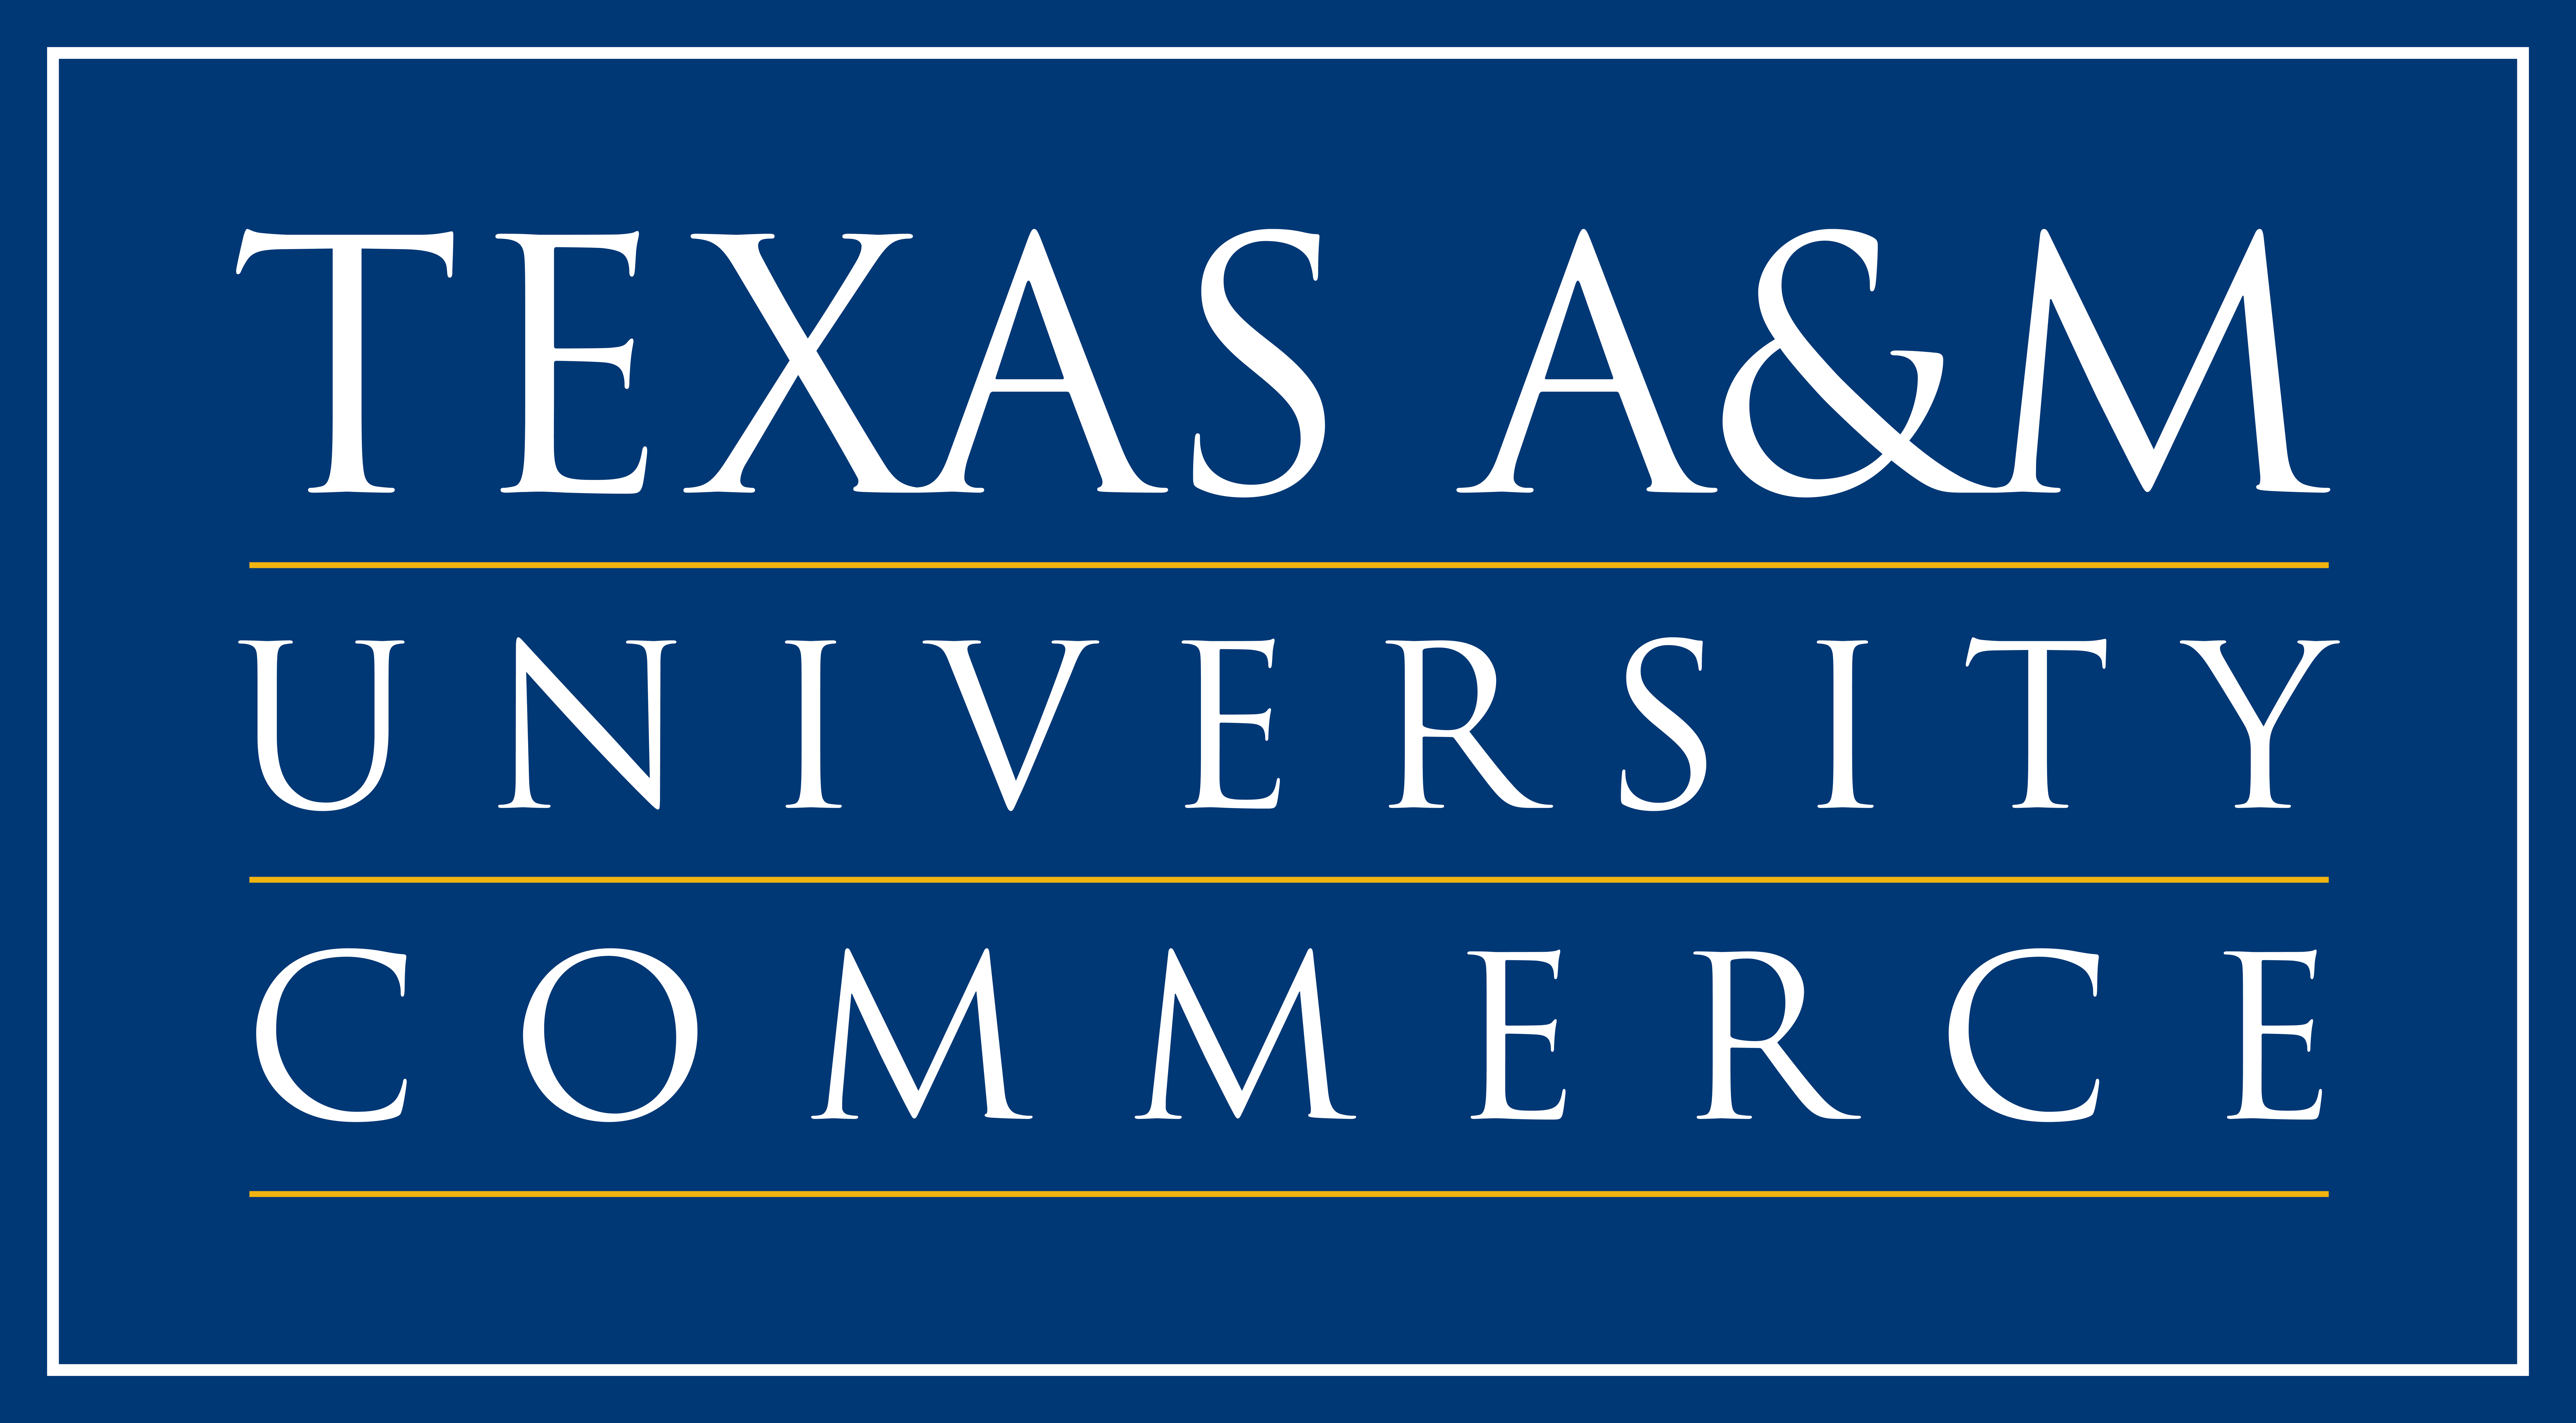 Texas A&M University - Commerce